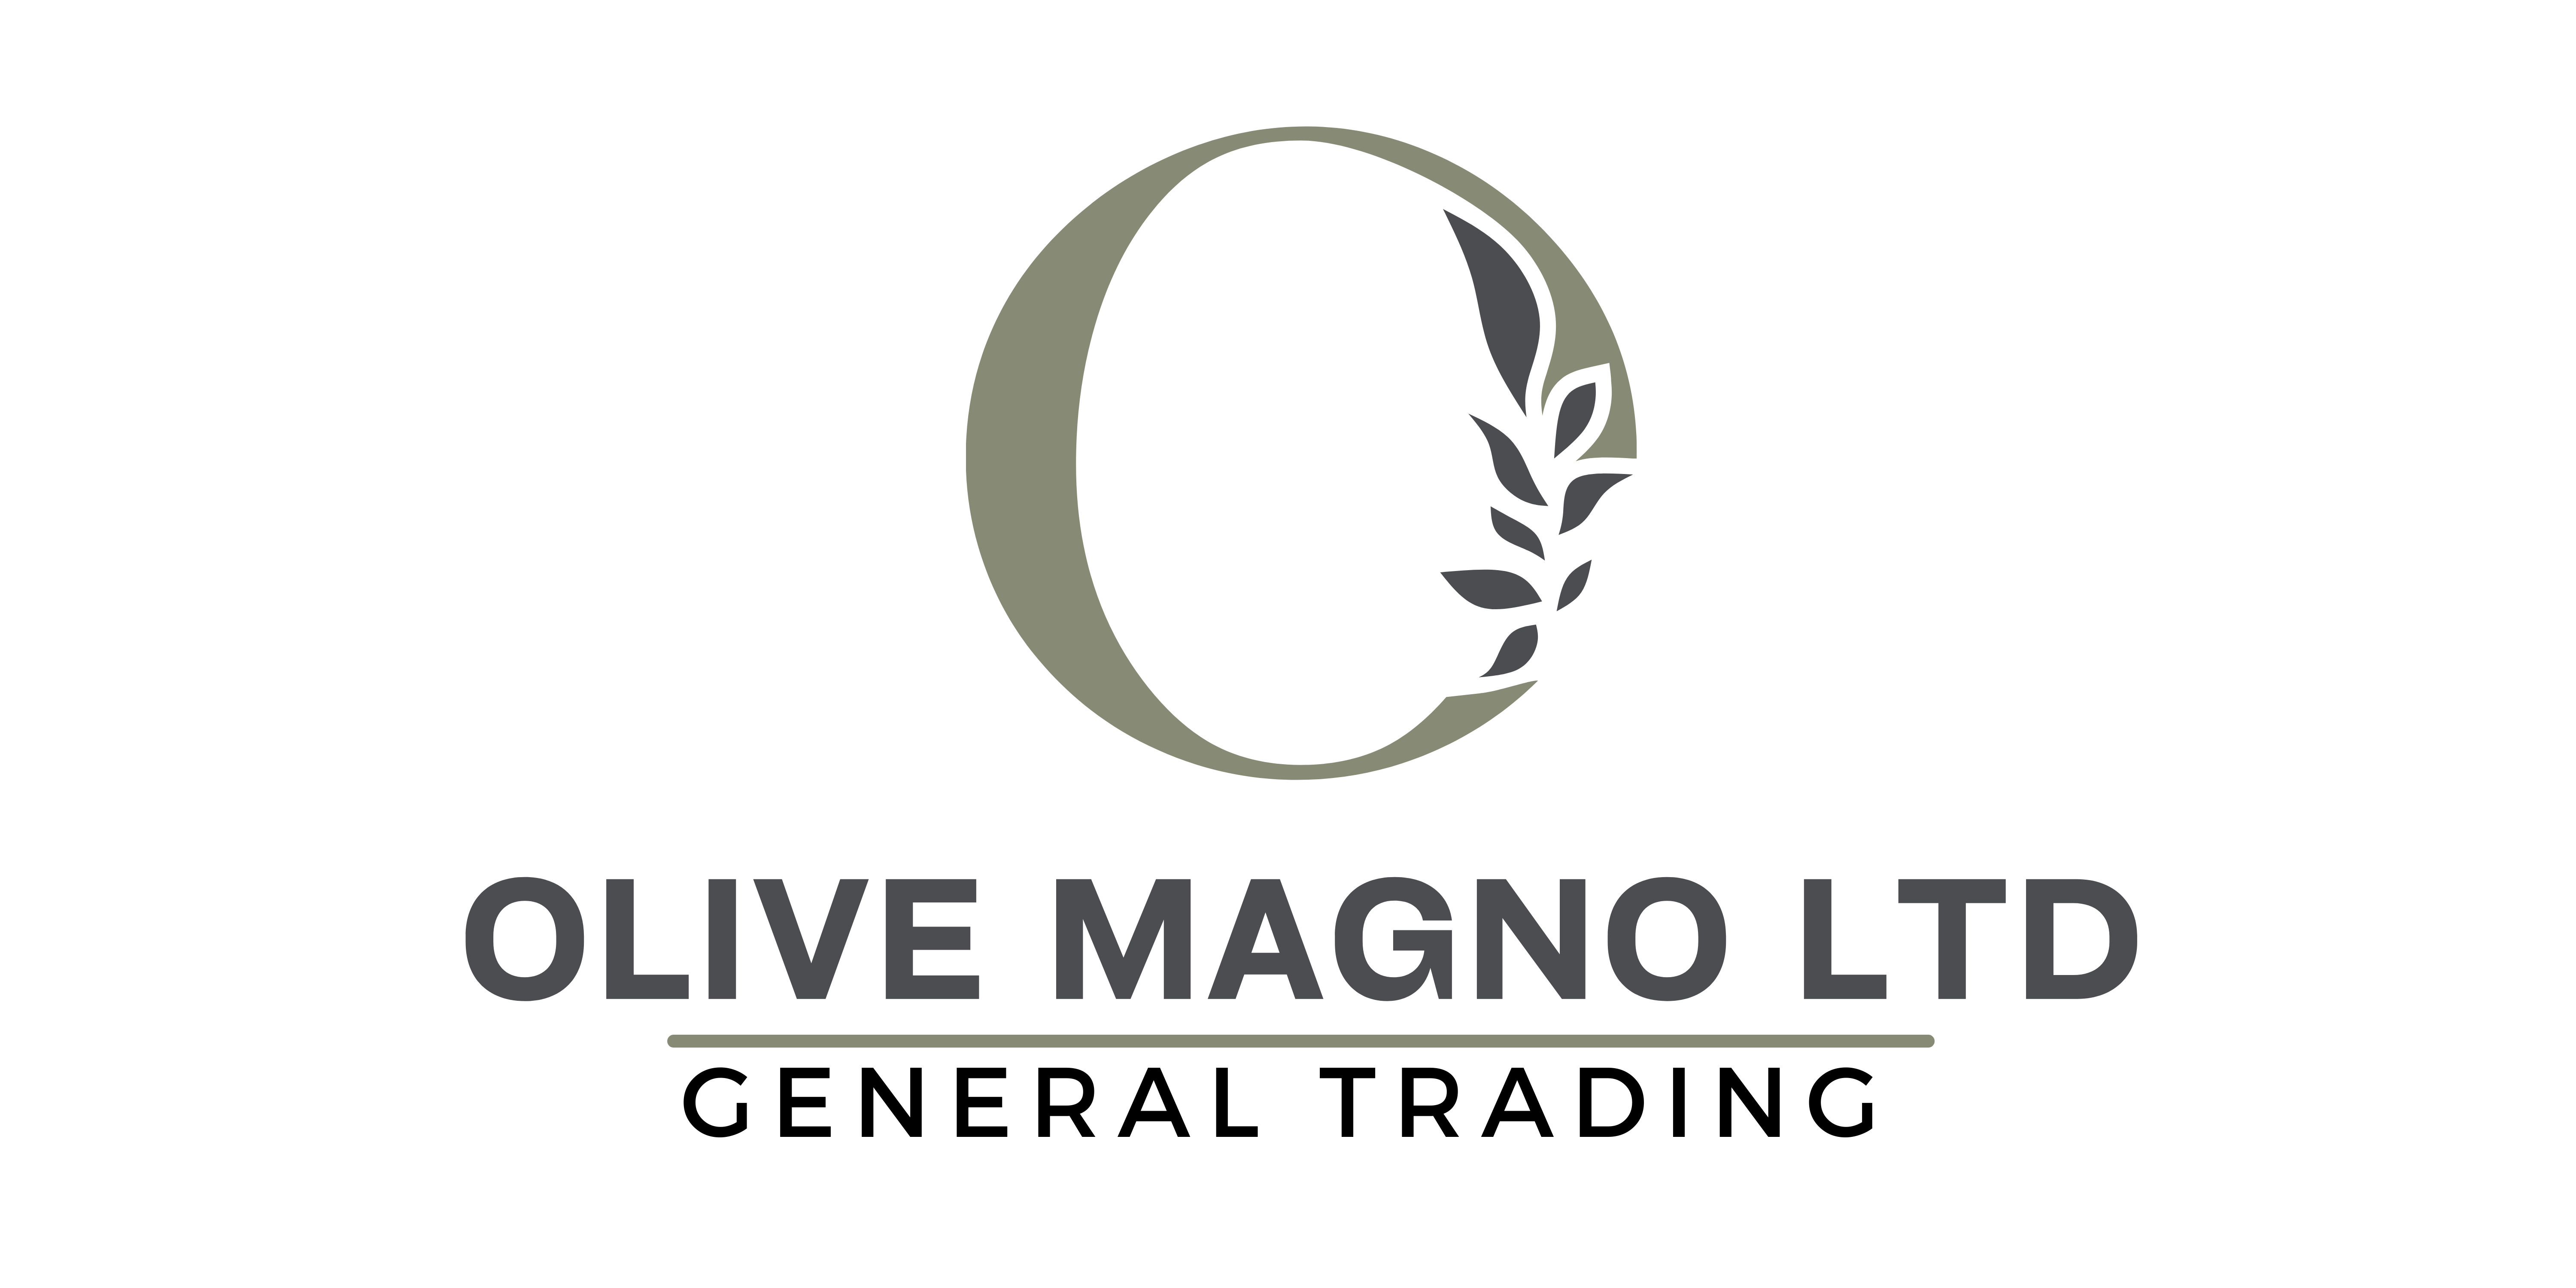 OLIVE MAGNO Ltd